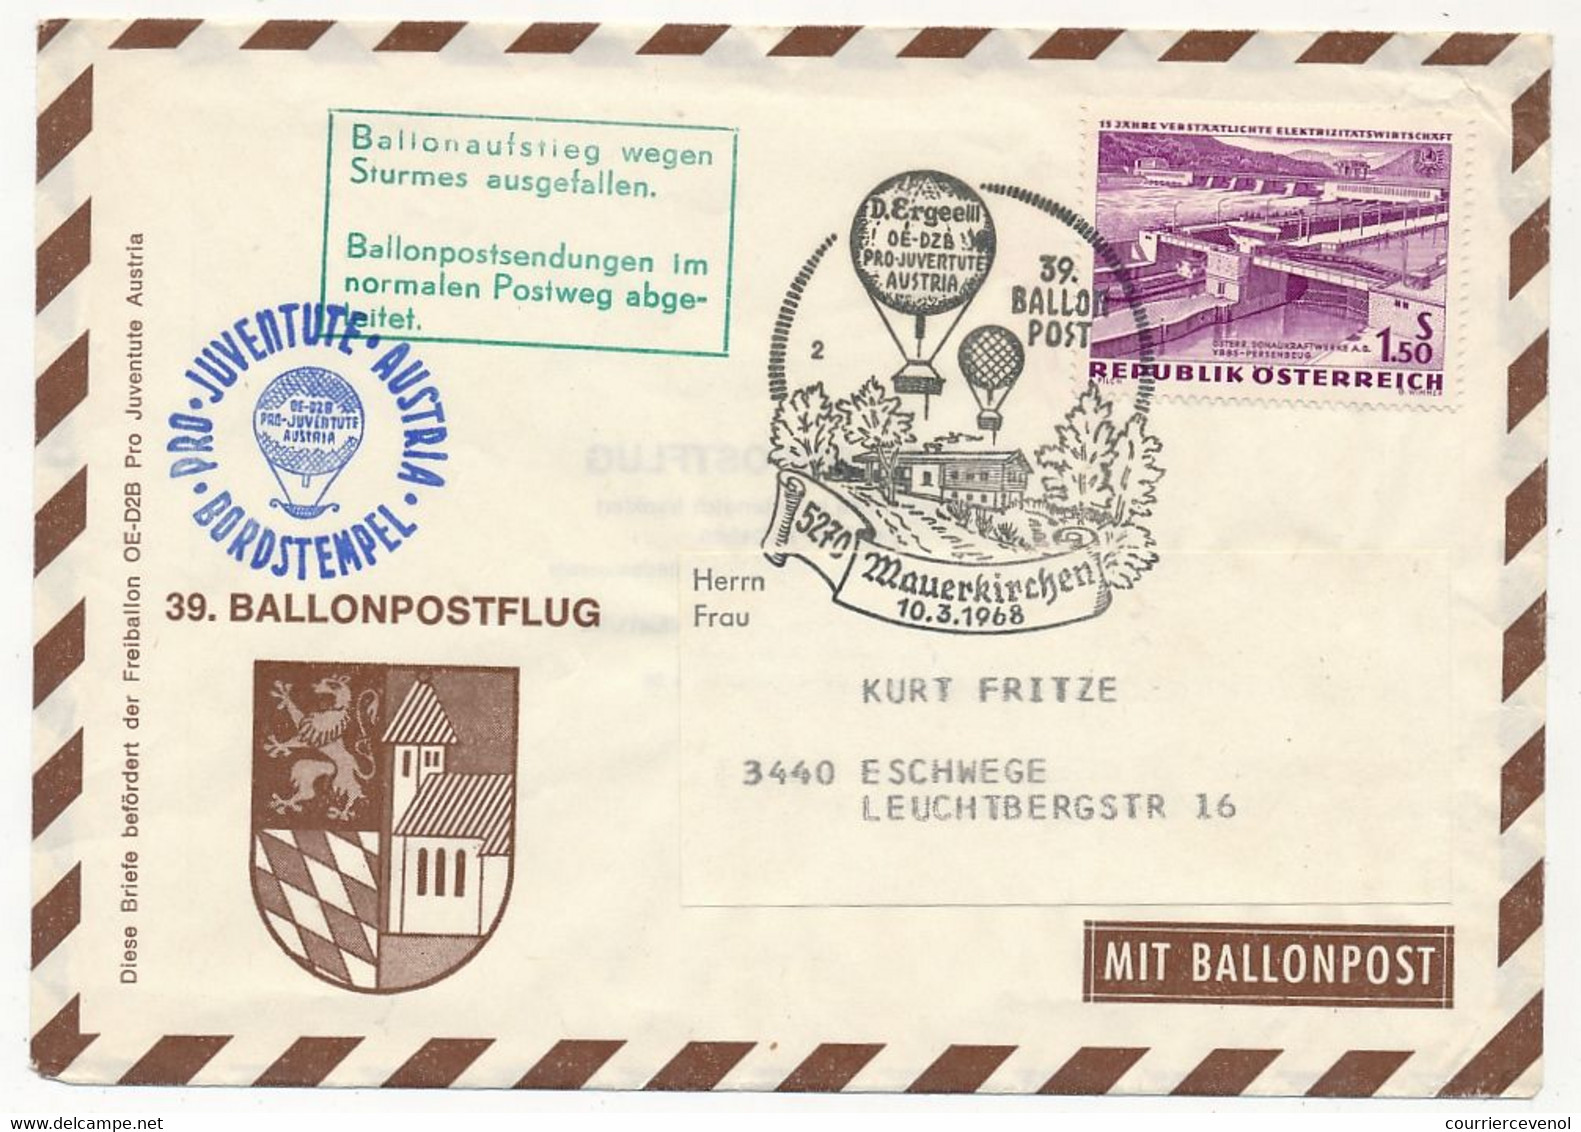 AUTRICHE - Env. - 39 BALLONPOSTFLUG Pro Juventute - 5270 Mauerkirchen - 10/3/1968 - Ballons